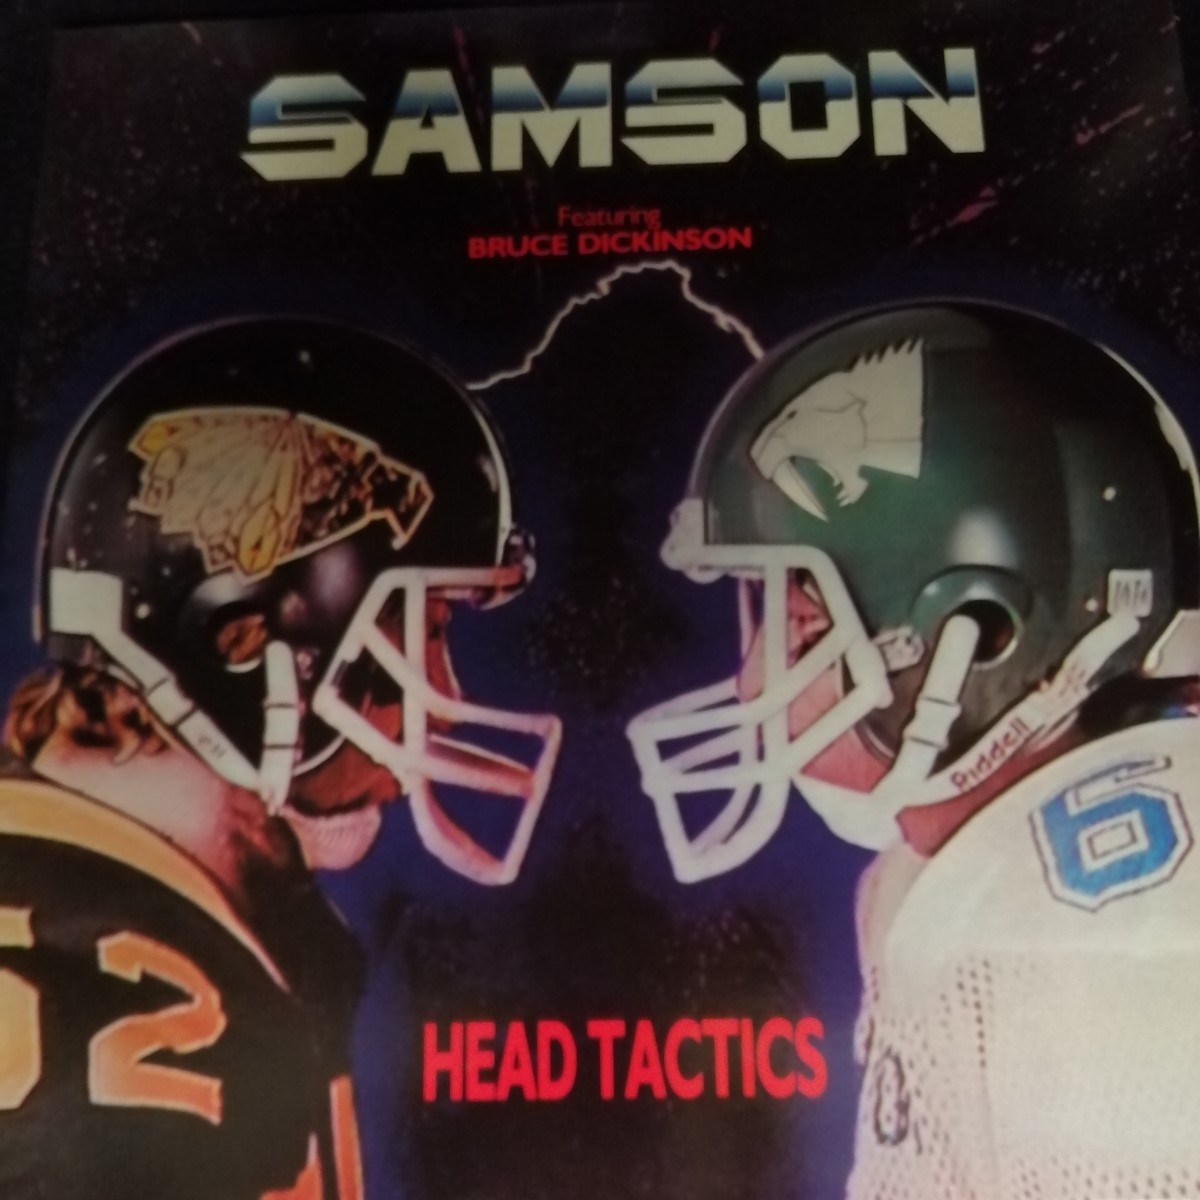 C09 中古LP 中古レコード　SAMSON head tactics feat.ブルースディッキンソン　EST 2006 UK盤 サムソン　アイアンメイデン　1986年_画像1